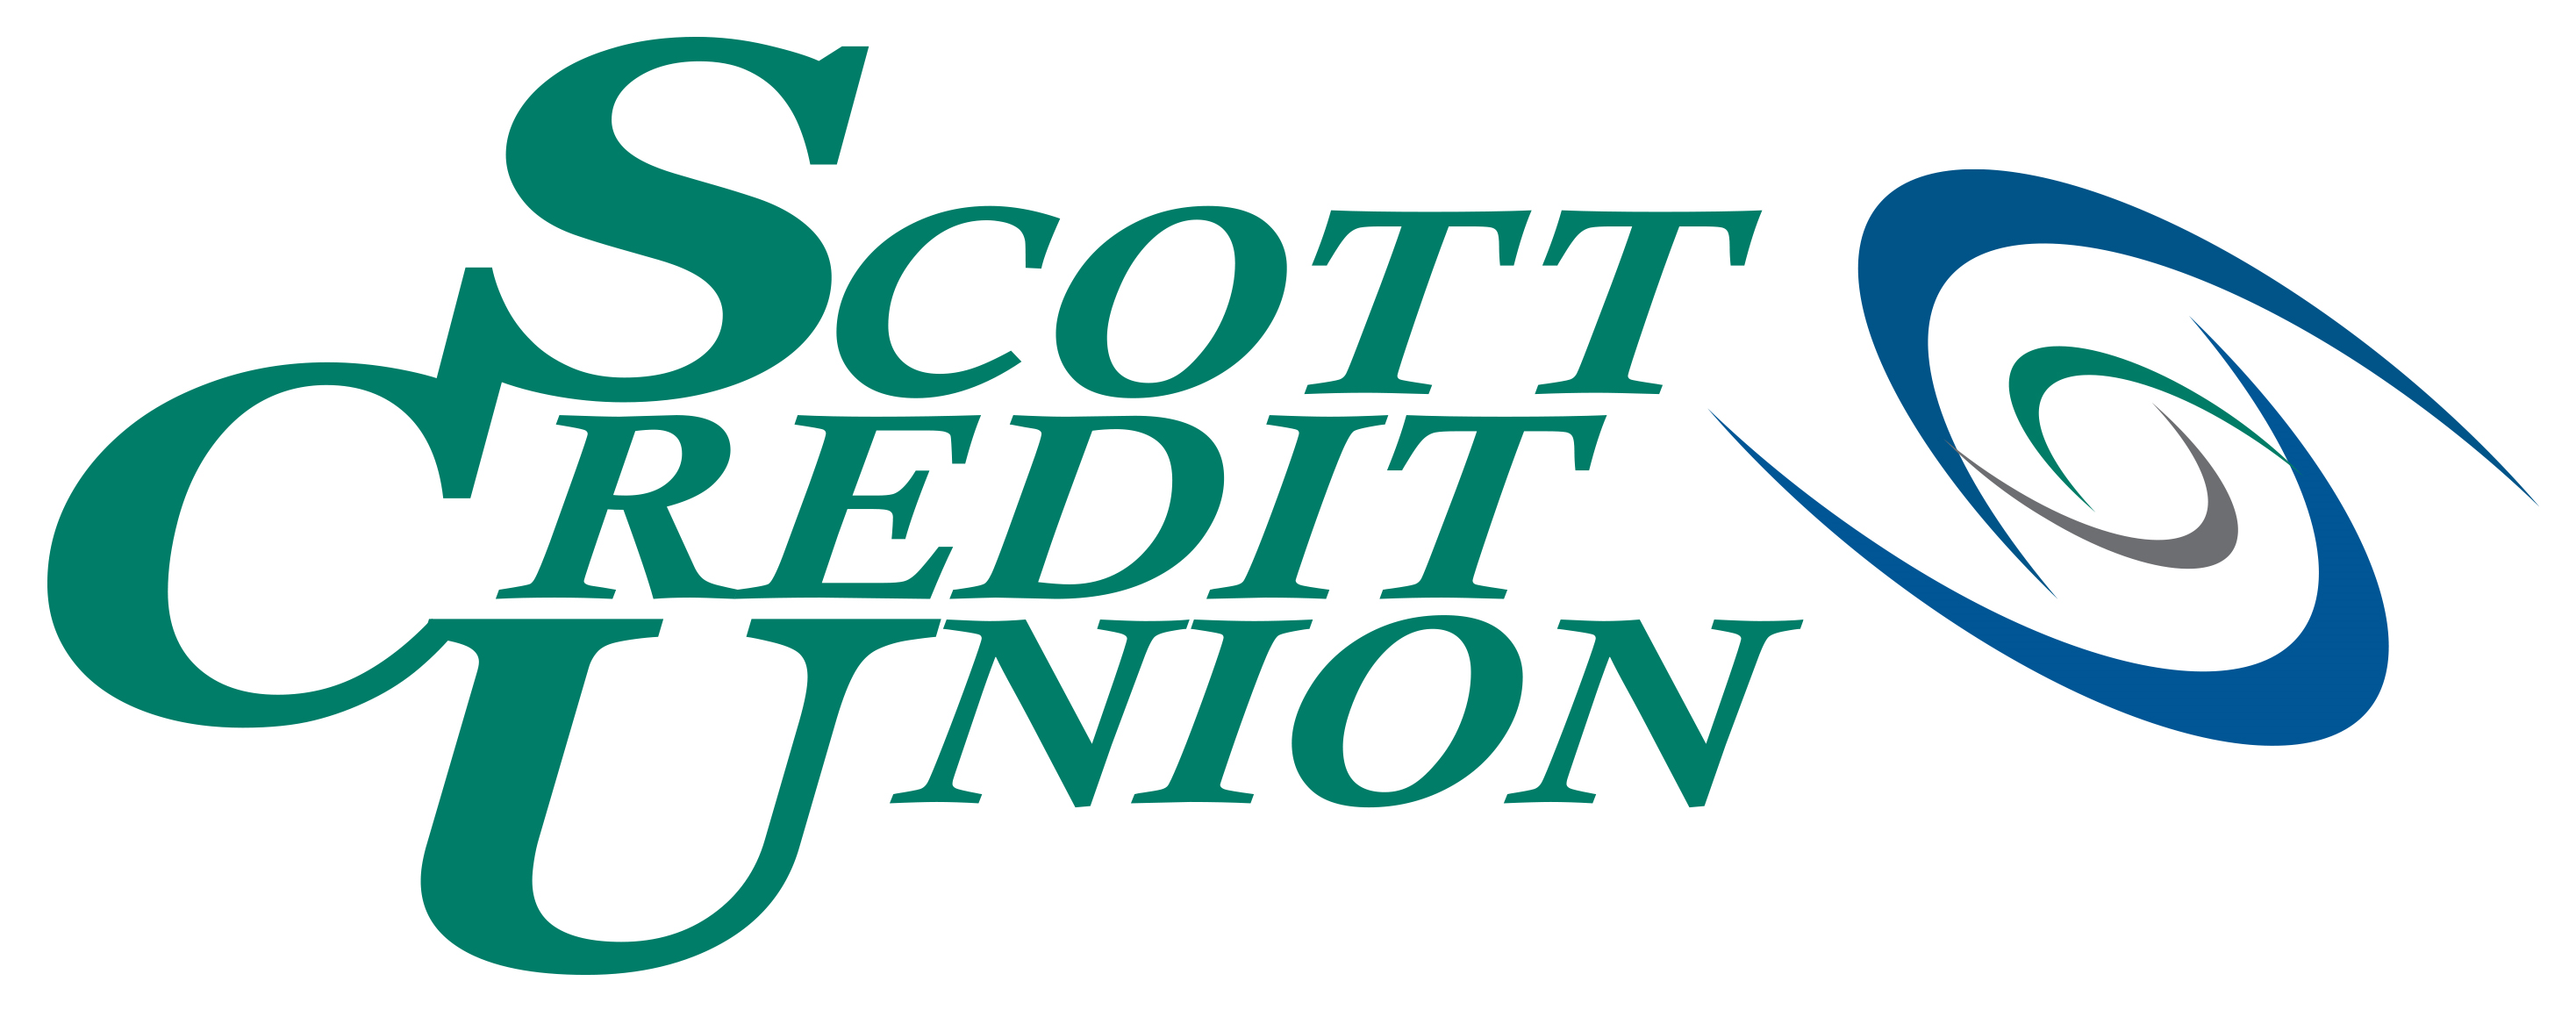 Scott Credit Union Company Logo